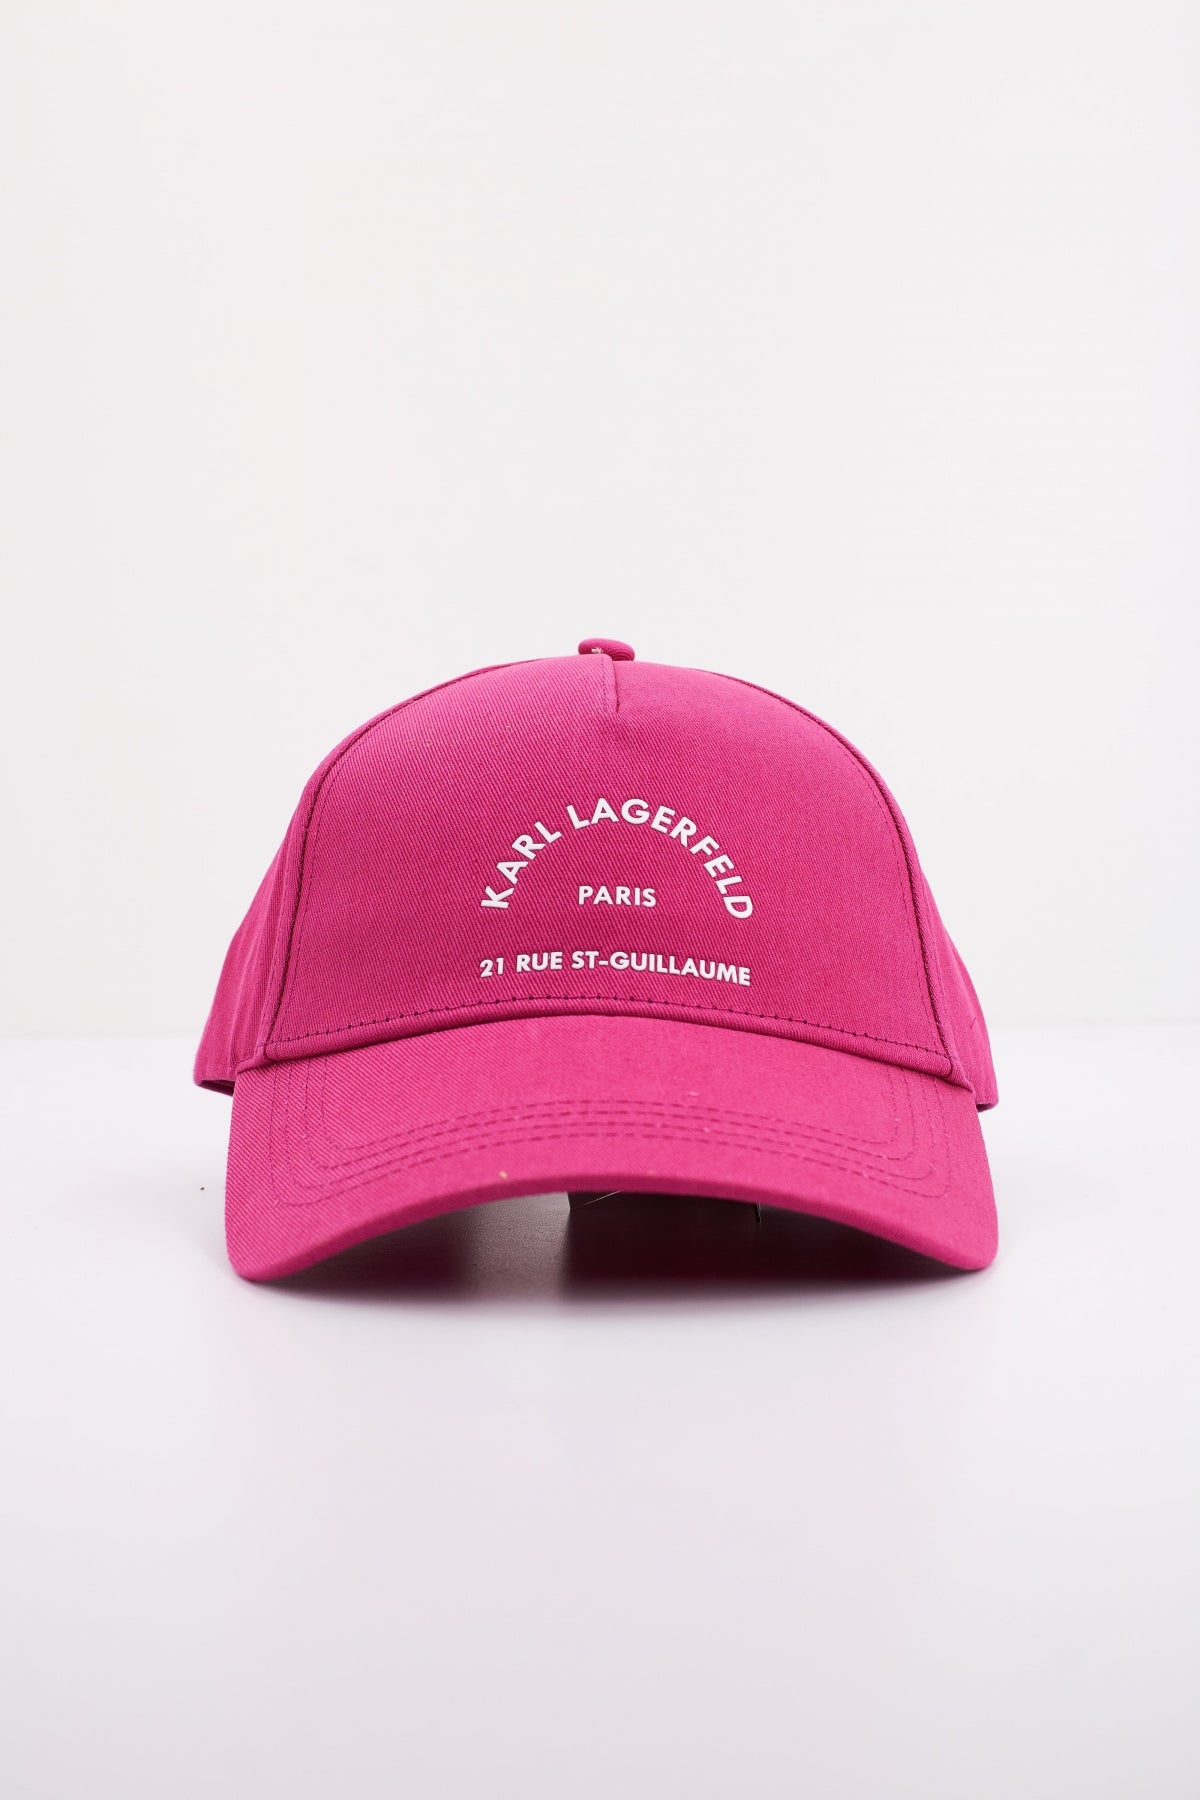 KARL LAGERFELD RSG CAP en color ROSA  (1)